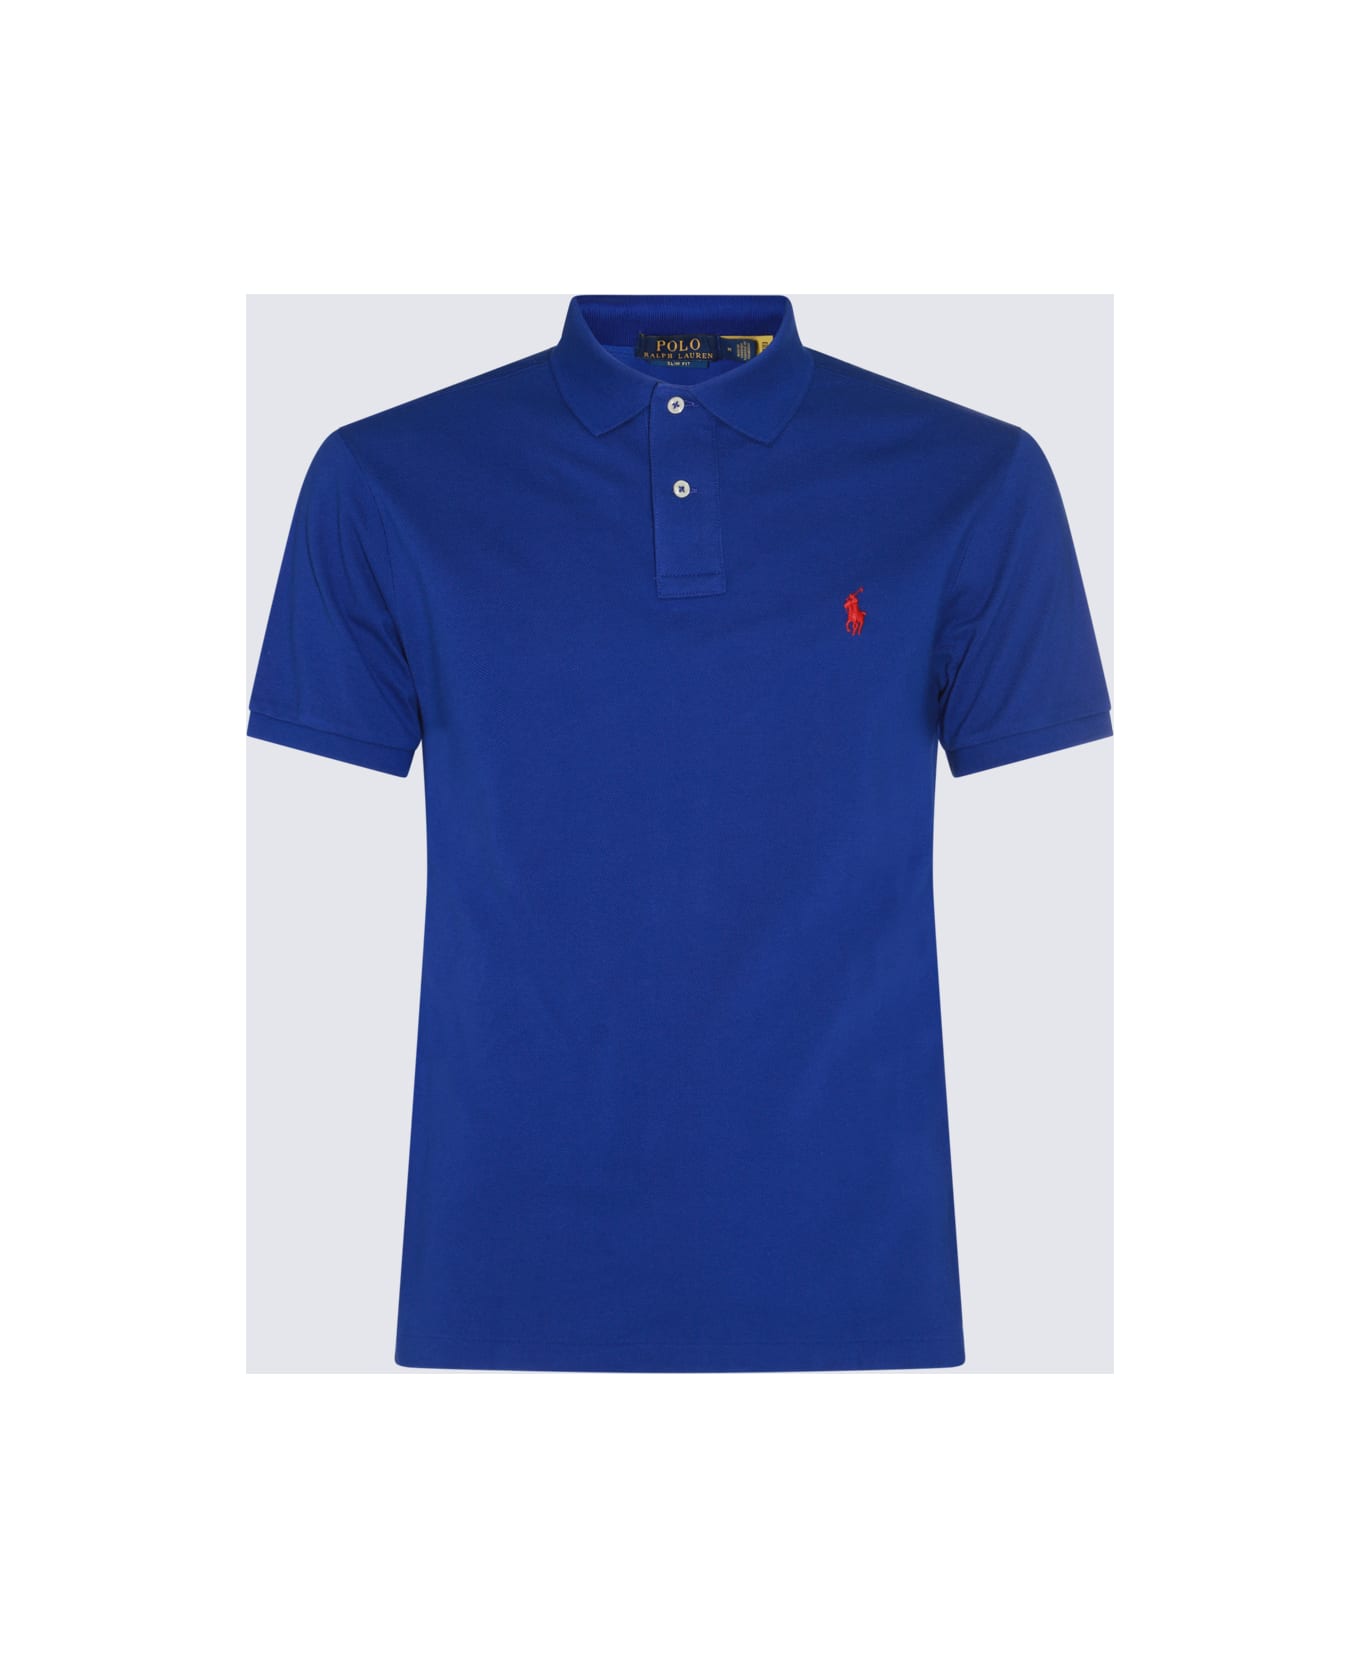 Polo Ralph Lauren Blue Cotton Polos Shirt - HERITAGE ROYAL